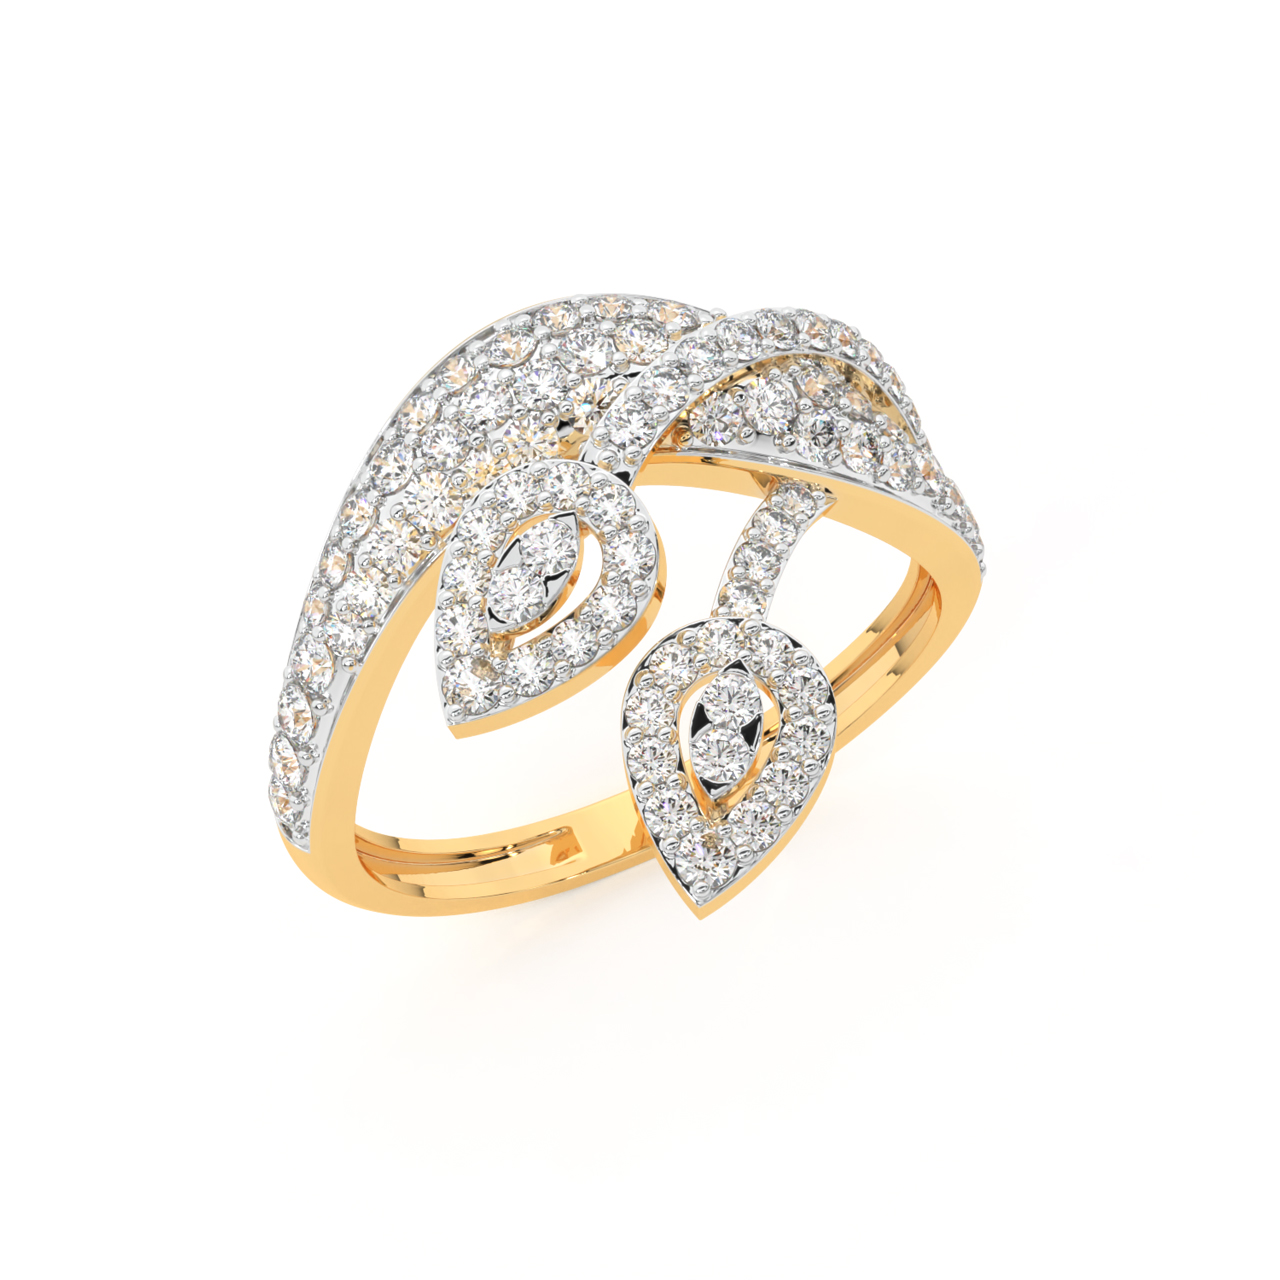 Shimmer Leaf Diamond Ring